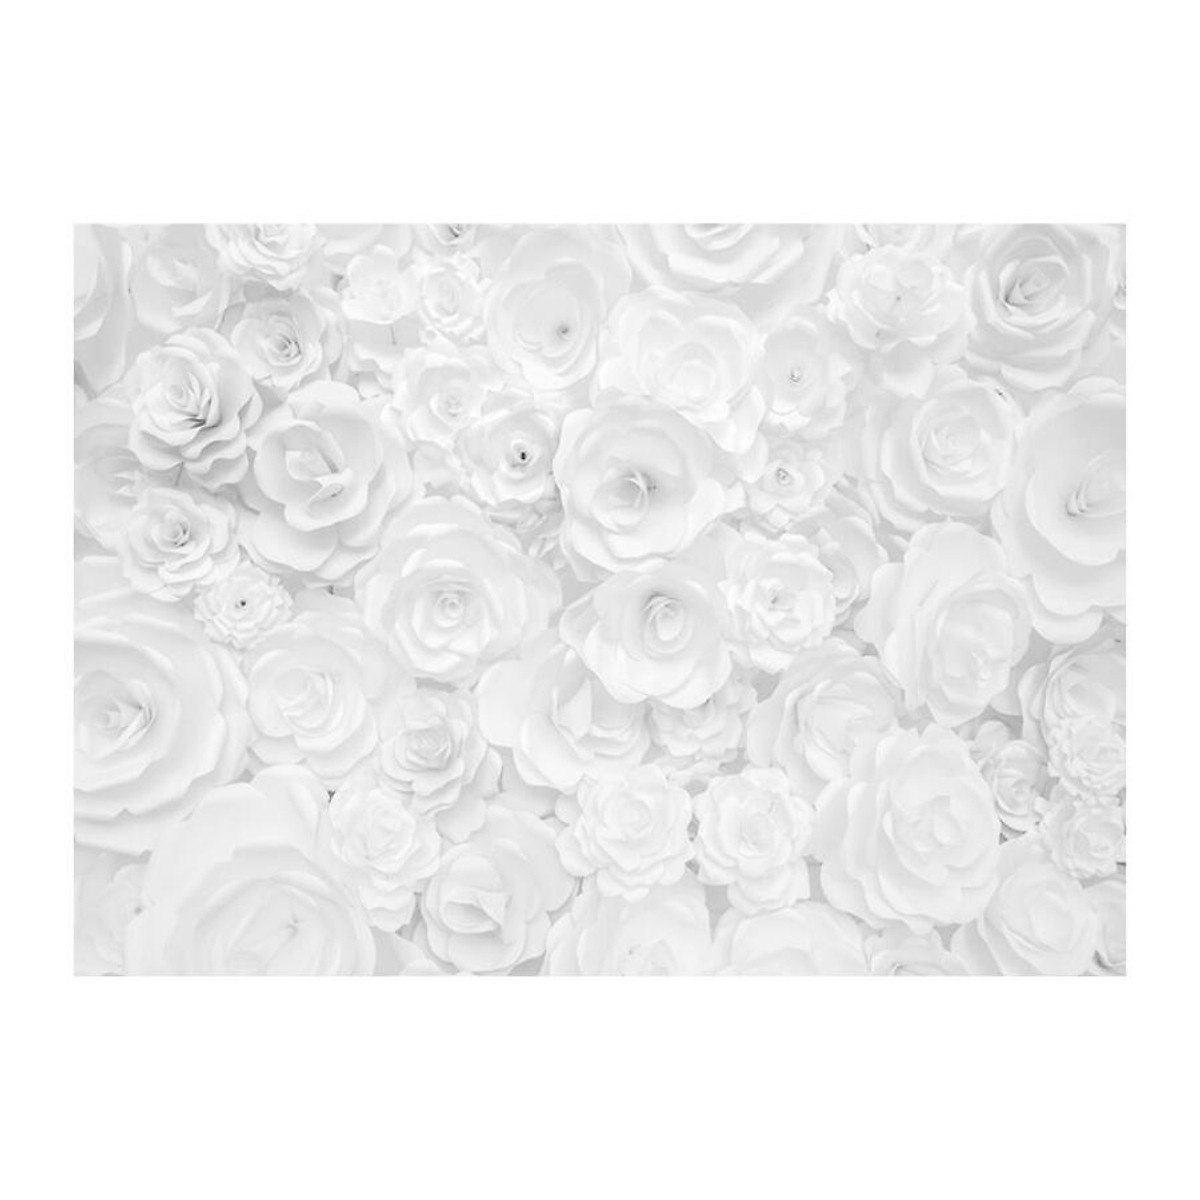 Mua White Flowers Printed Digital Photography Background Cloth Studio  Backdrop